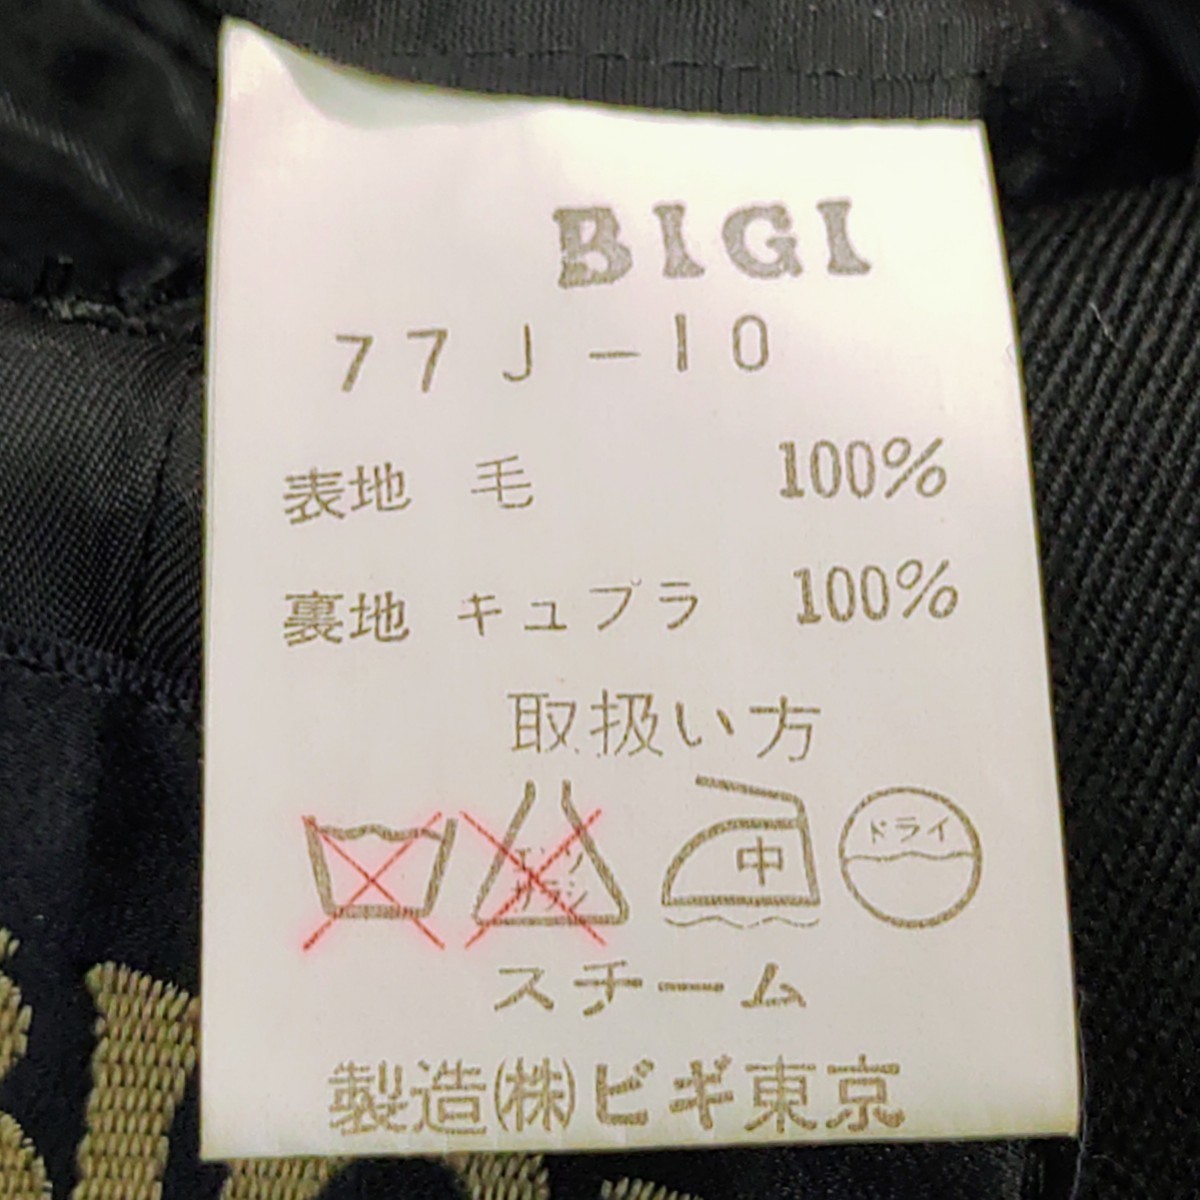 2309027 BIGI Bigi double jacket lining attaching thick tailored jacket black black formal wool made in Japan sleeve fake button M